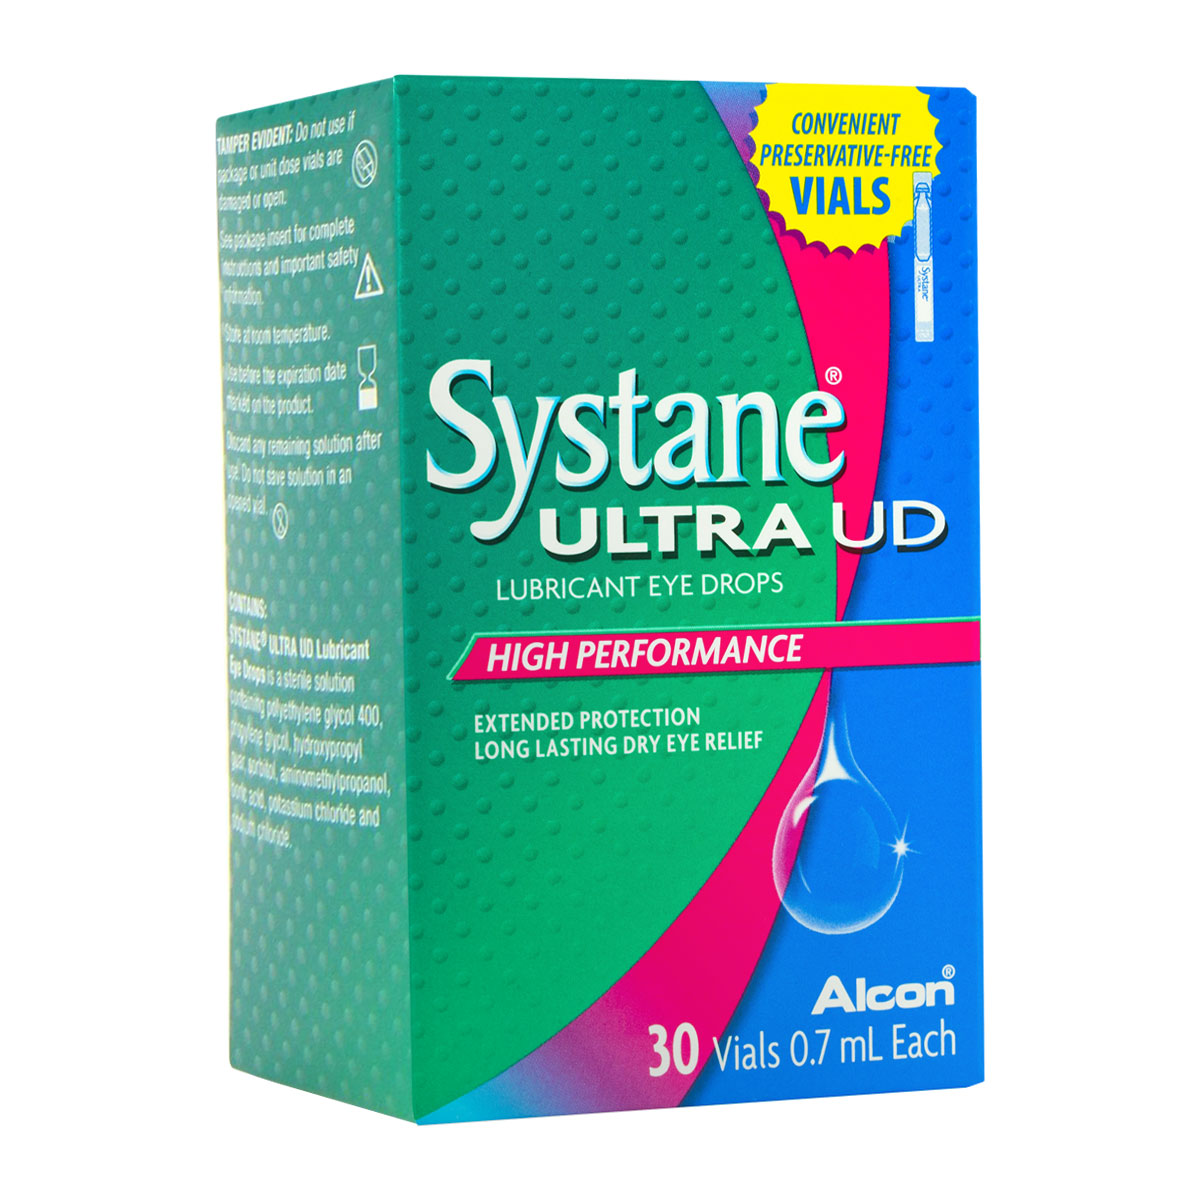 Systane Ultra Eye Drops - Vials (30*0.7ml)